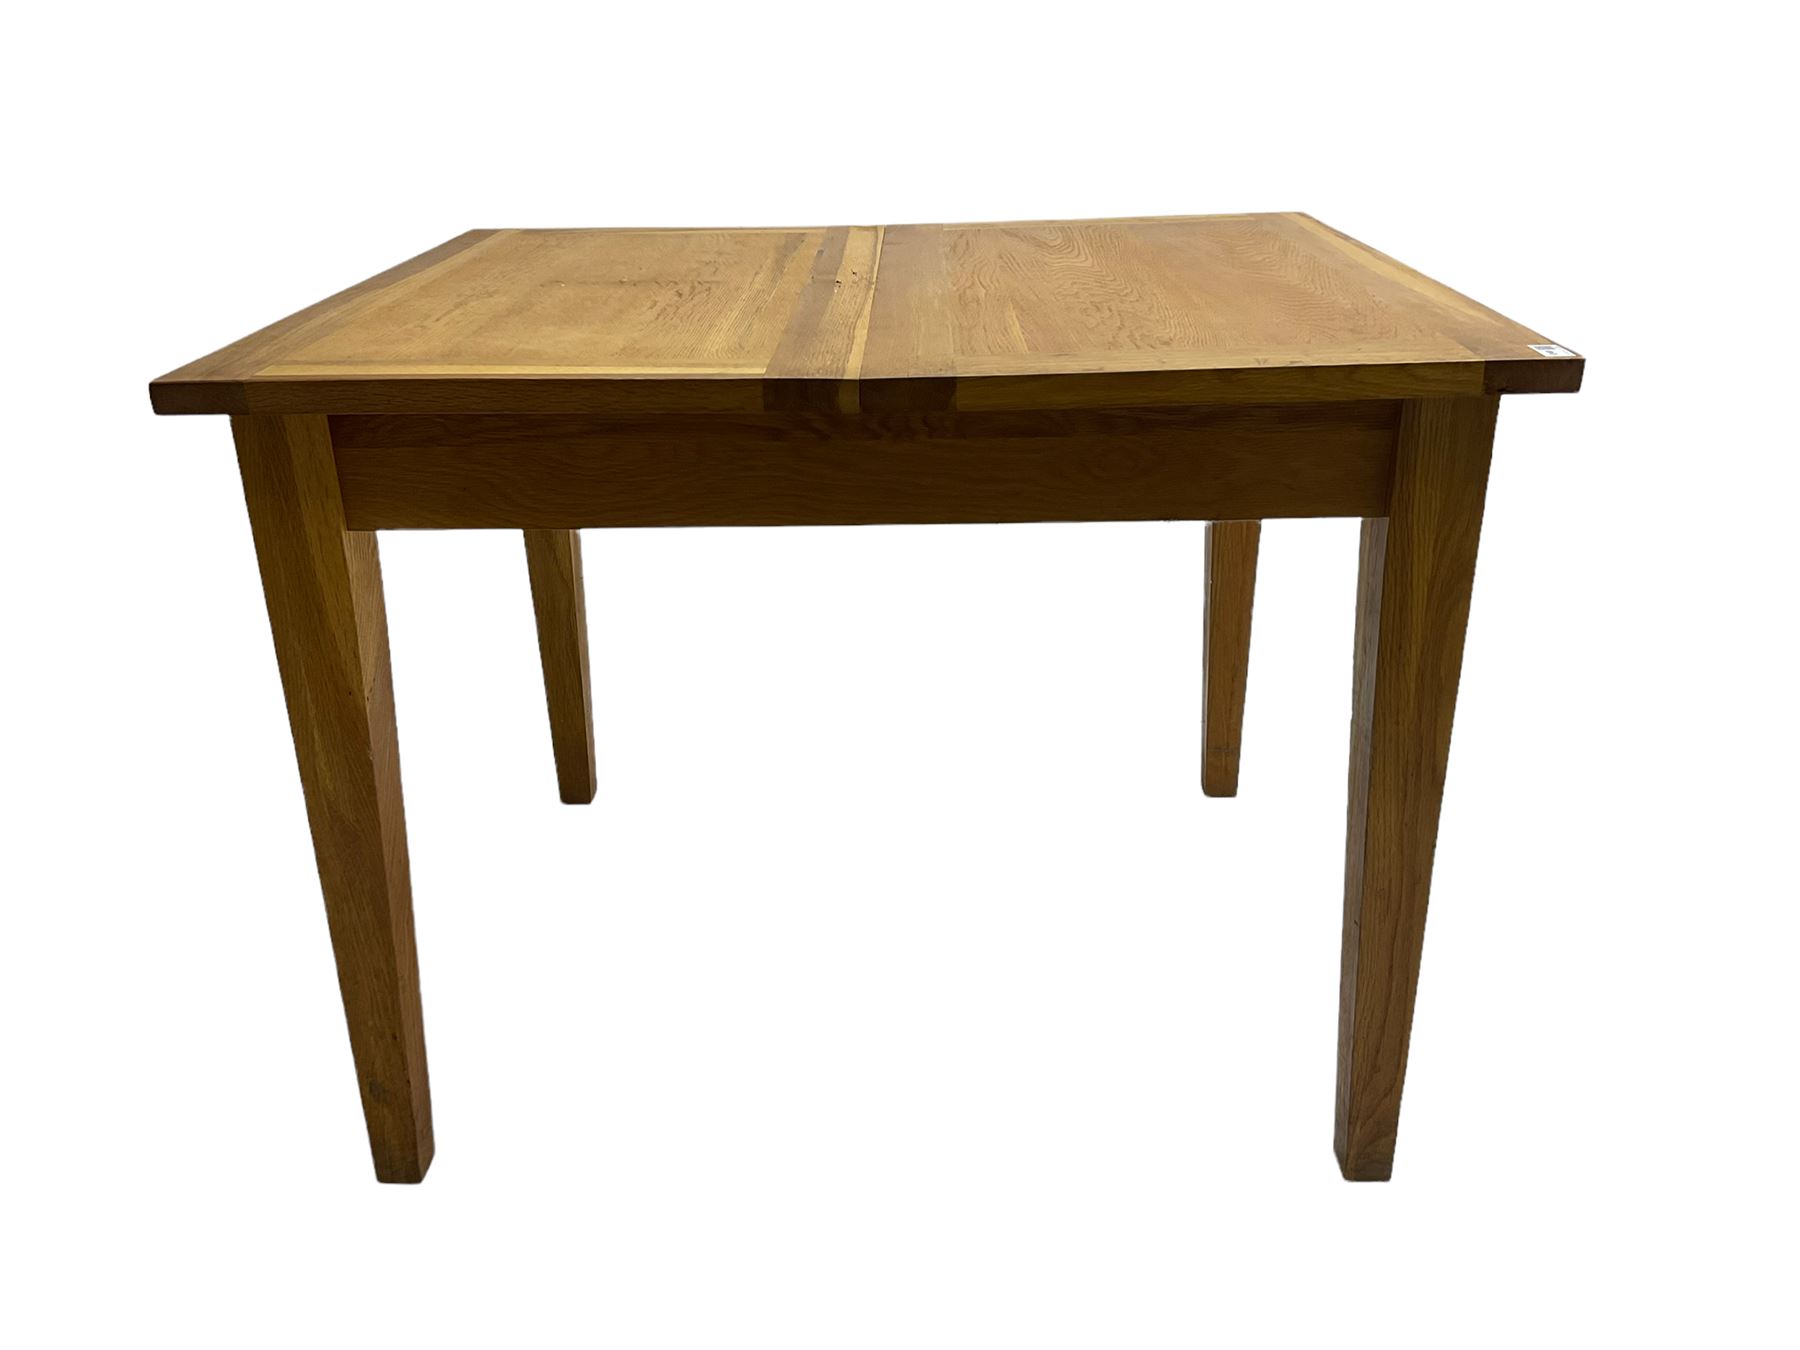 Light oak extending dining table - Image 5 of 7